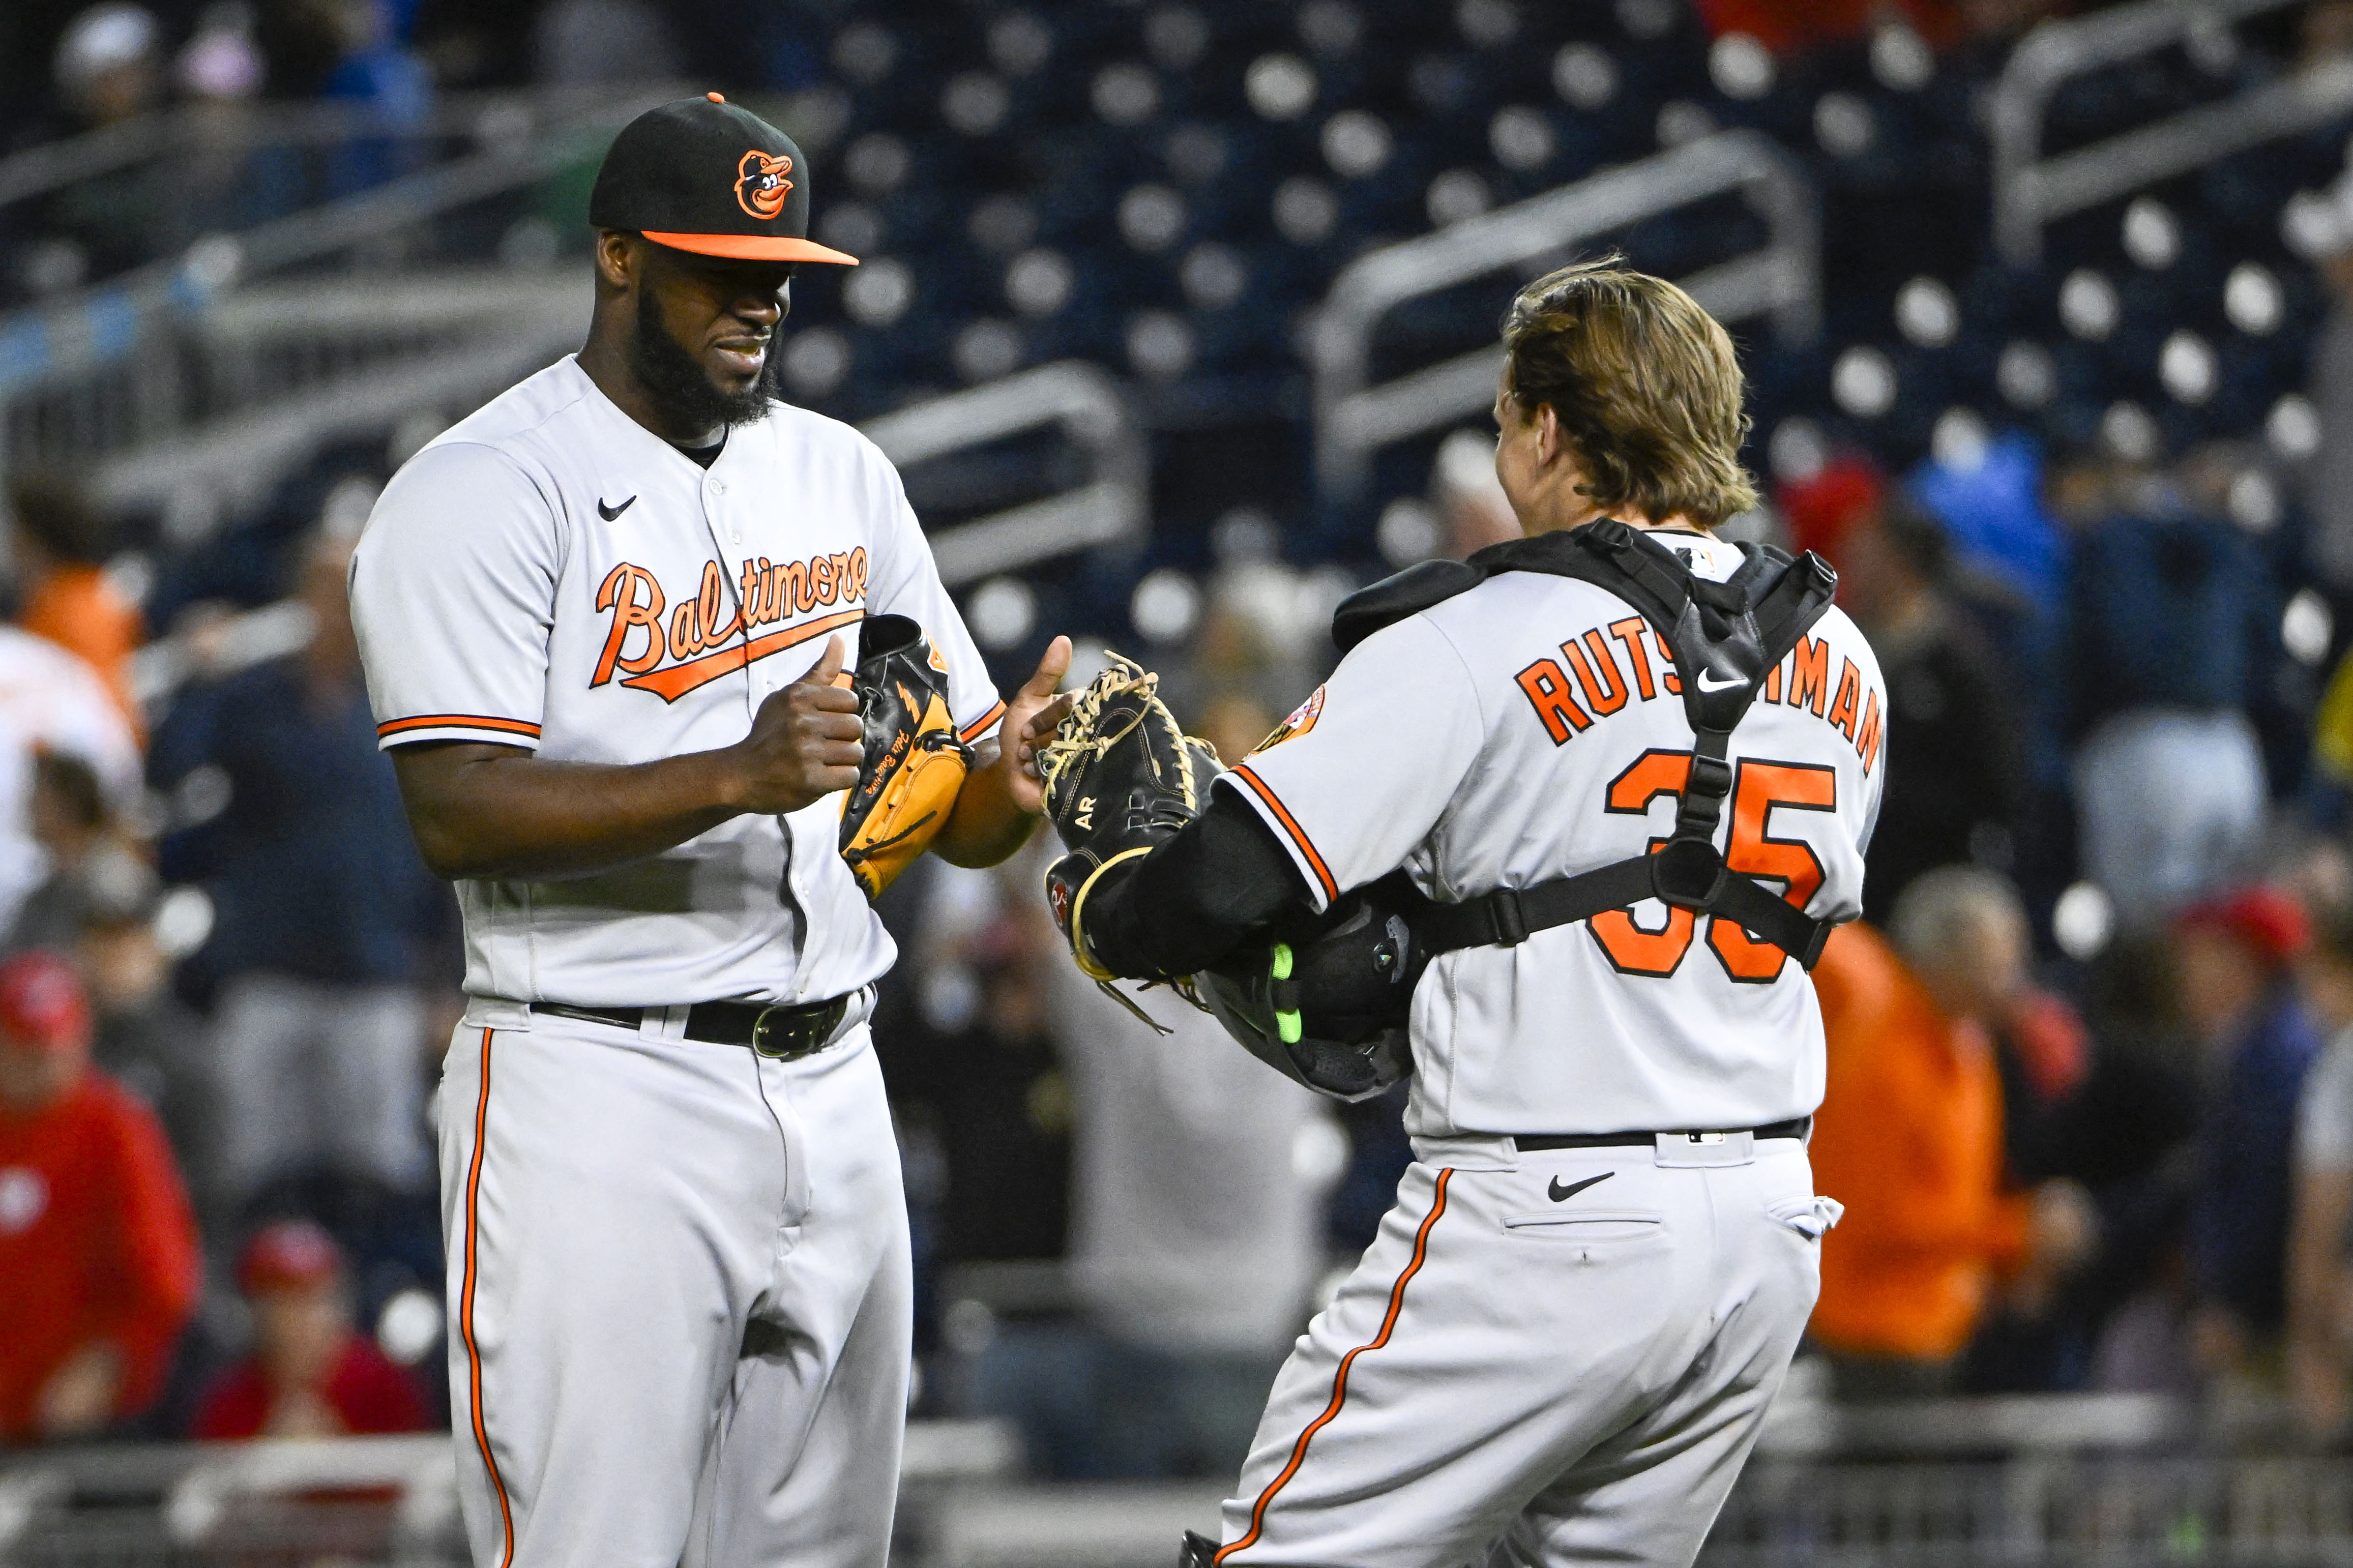 In photos: MLB: Baltimore Orioles beat Washington Nationals, get